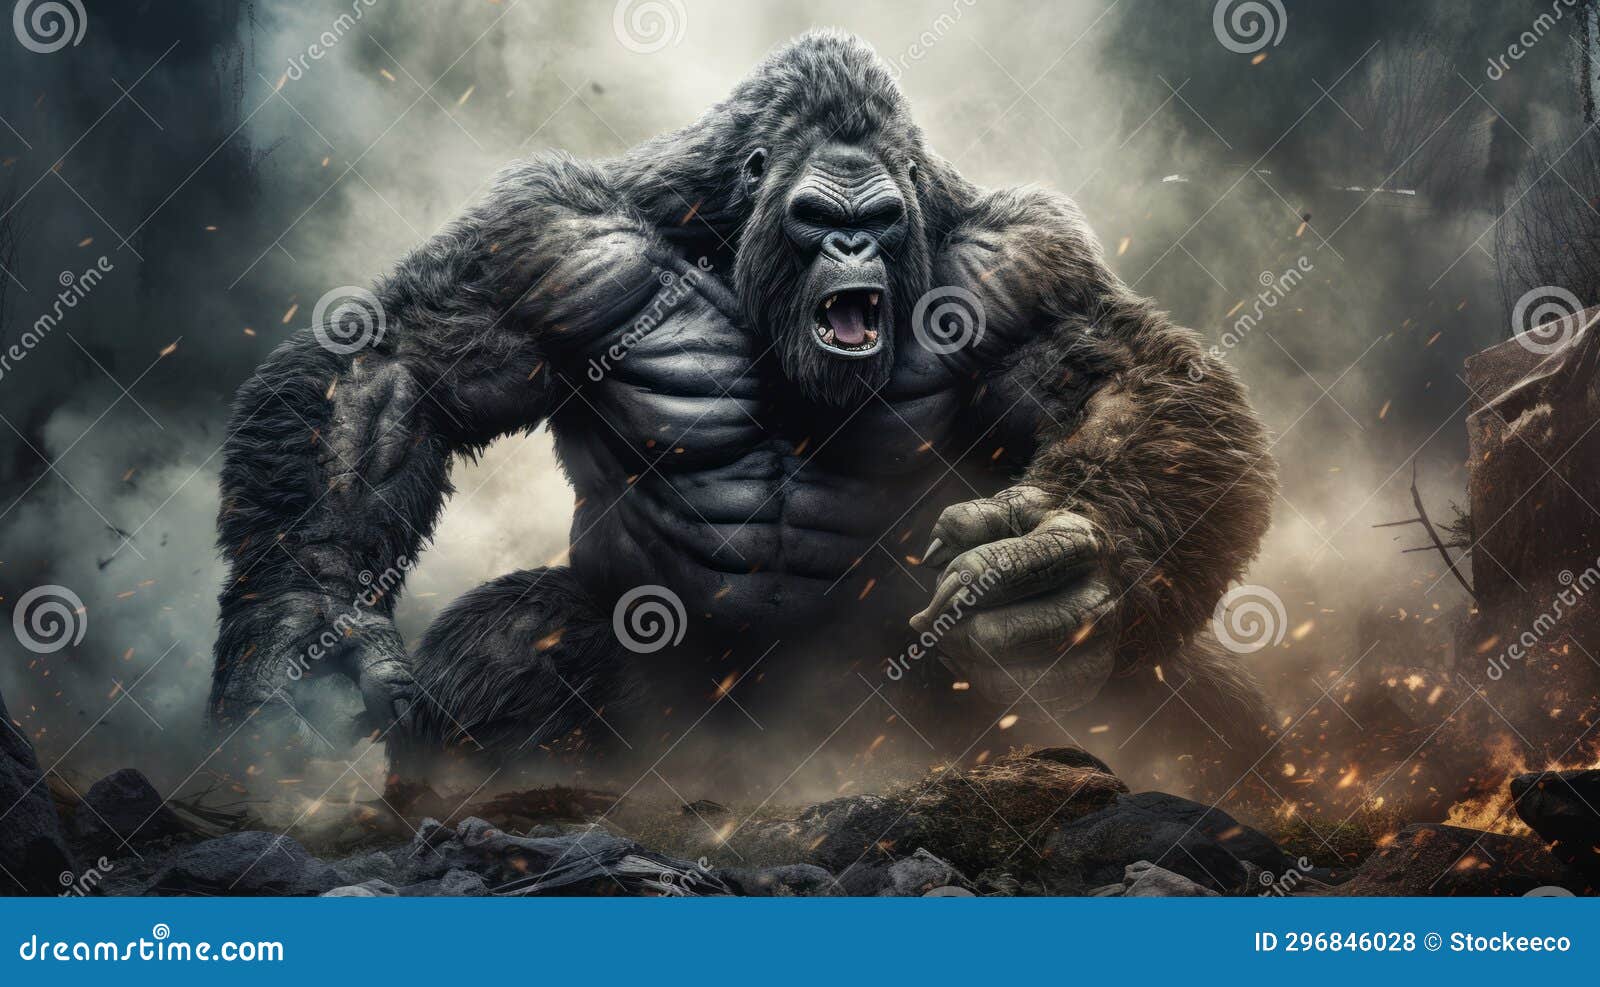 Epic Battle: Giant Gorilla Vs. Hulu Desktop Wallpaper Stock ...